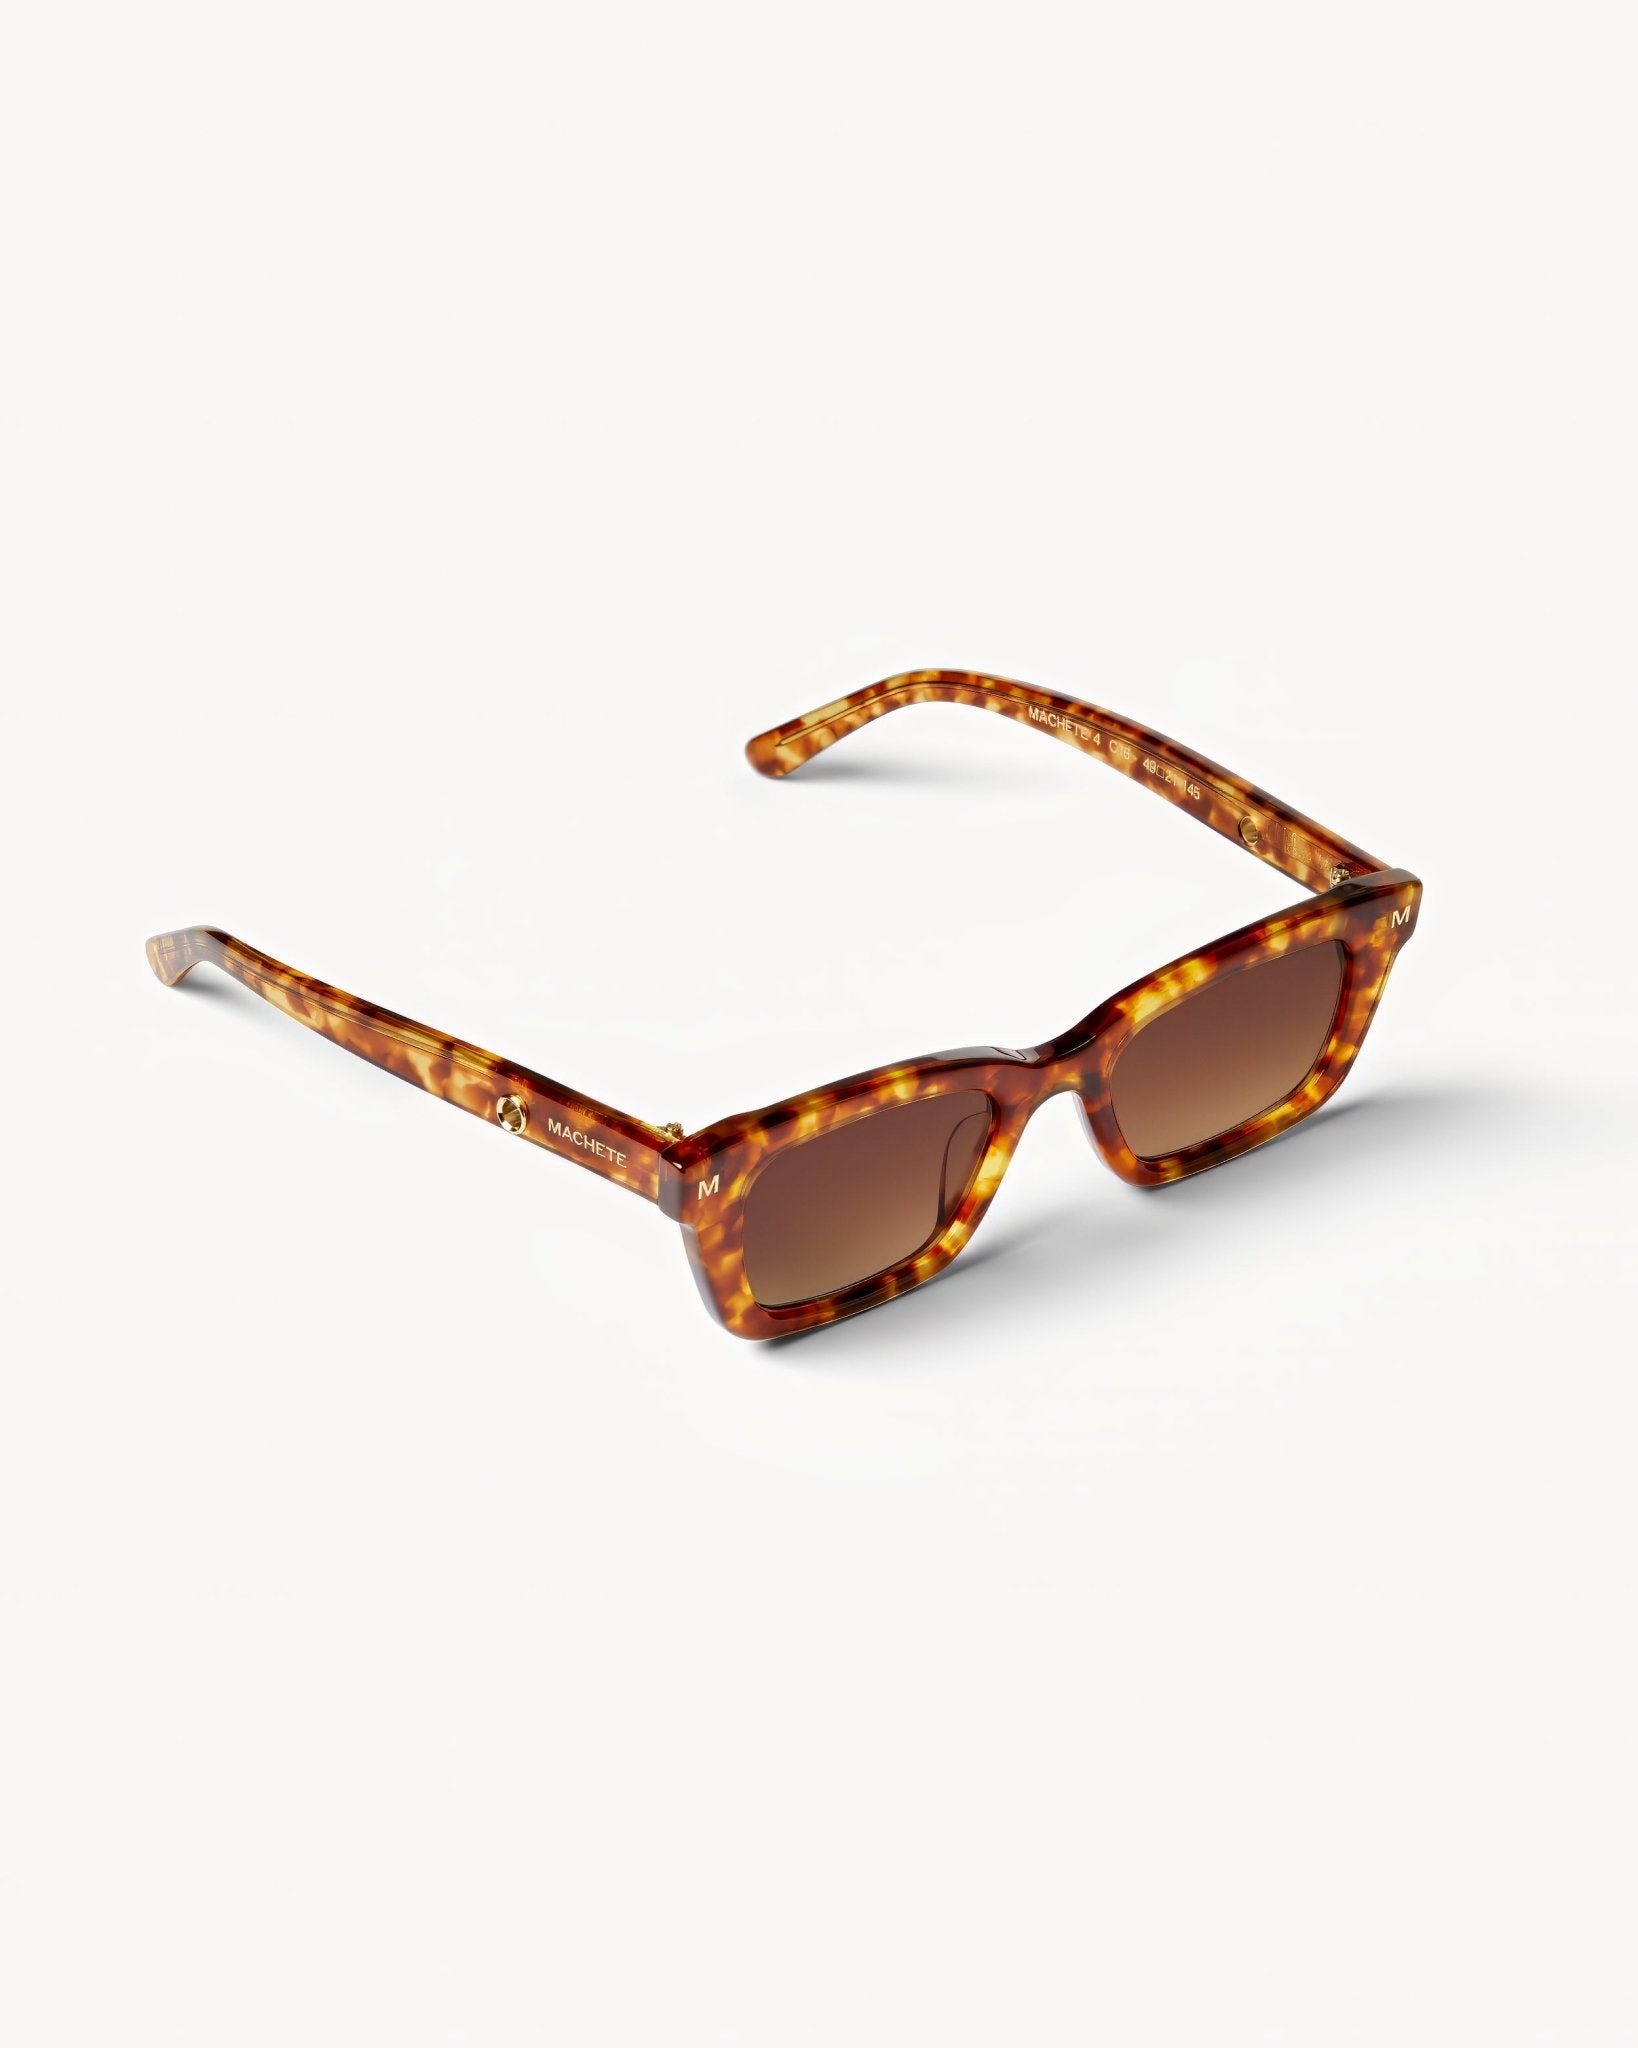 MACHETE Ruby Sunglasses in Mod Tortoise